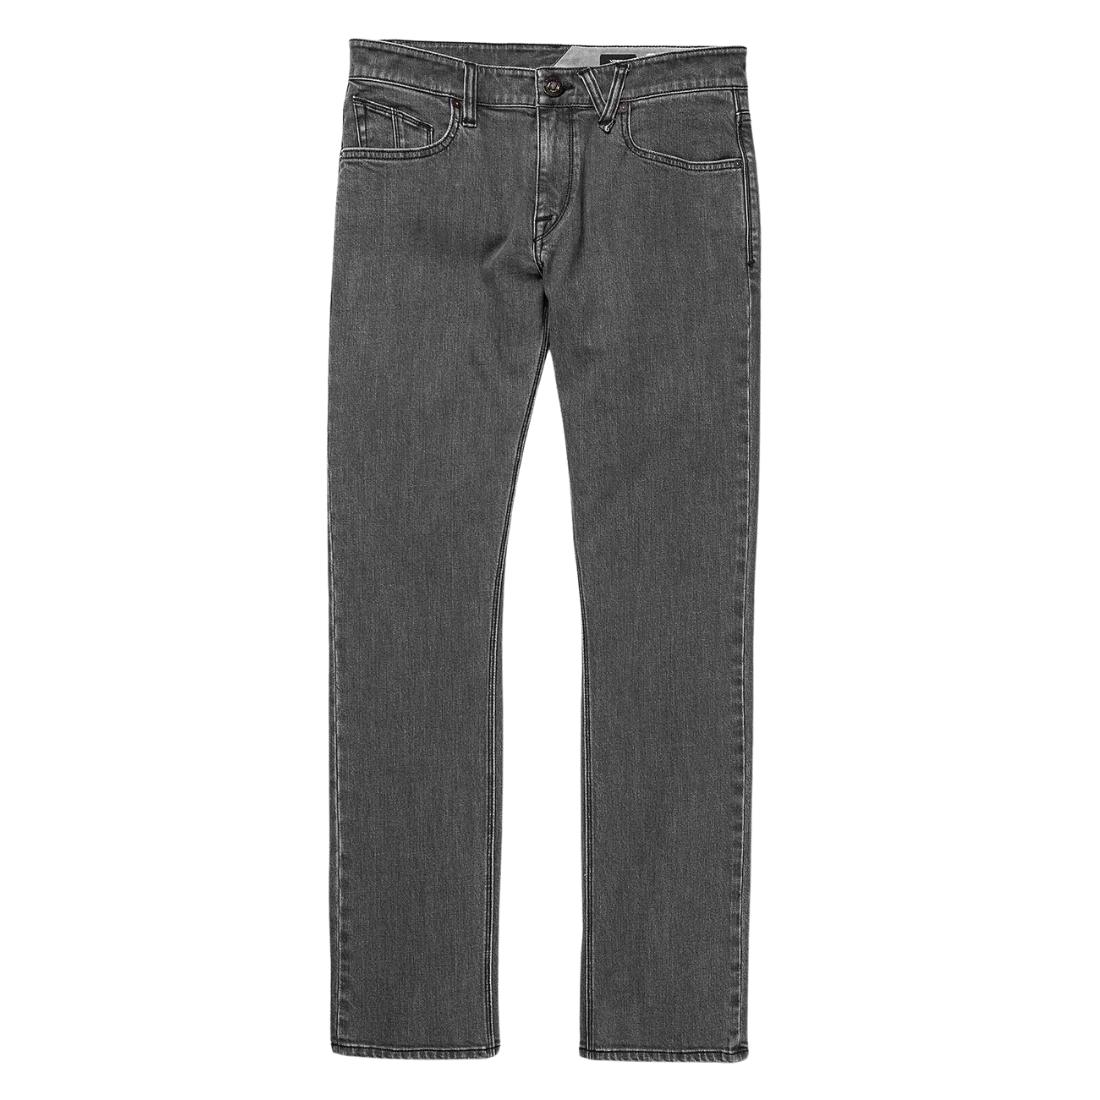 Volcom Vorta Denim Jeans - Easy Enzyme Grey - Mens Slim/Skinny Denim Jeans by Volcom